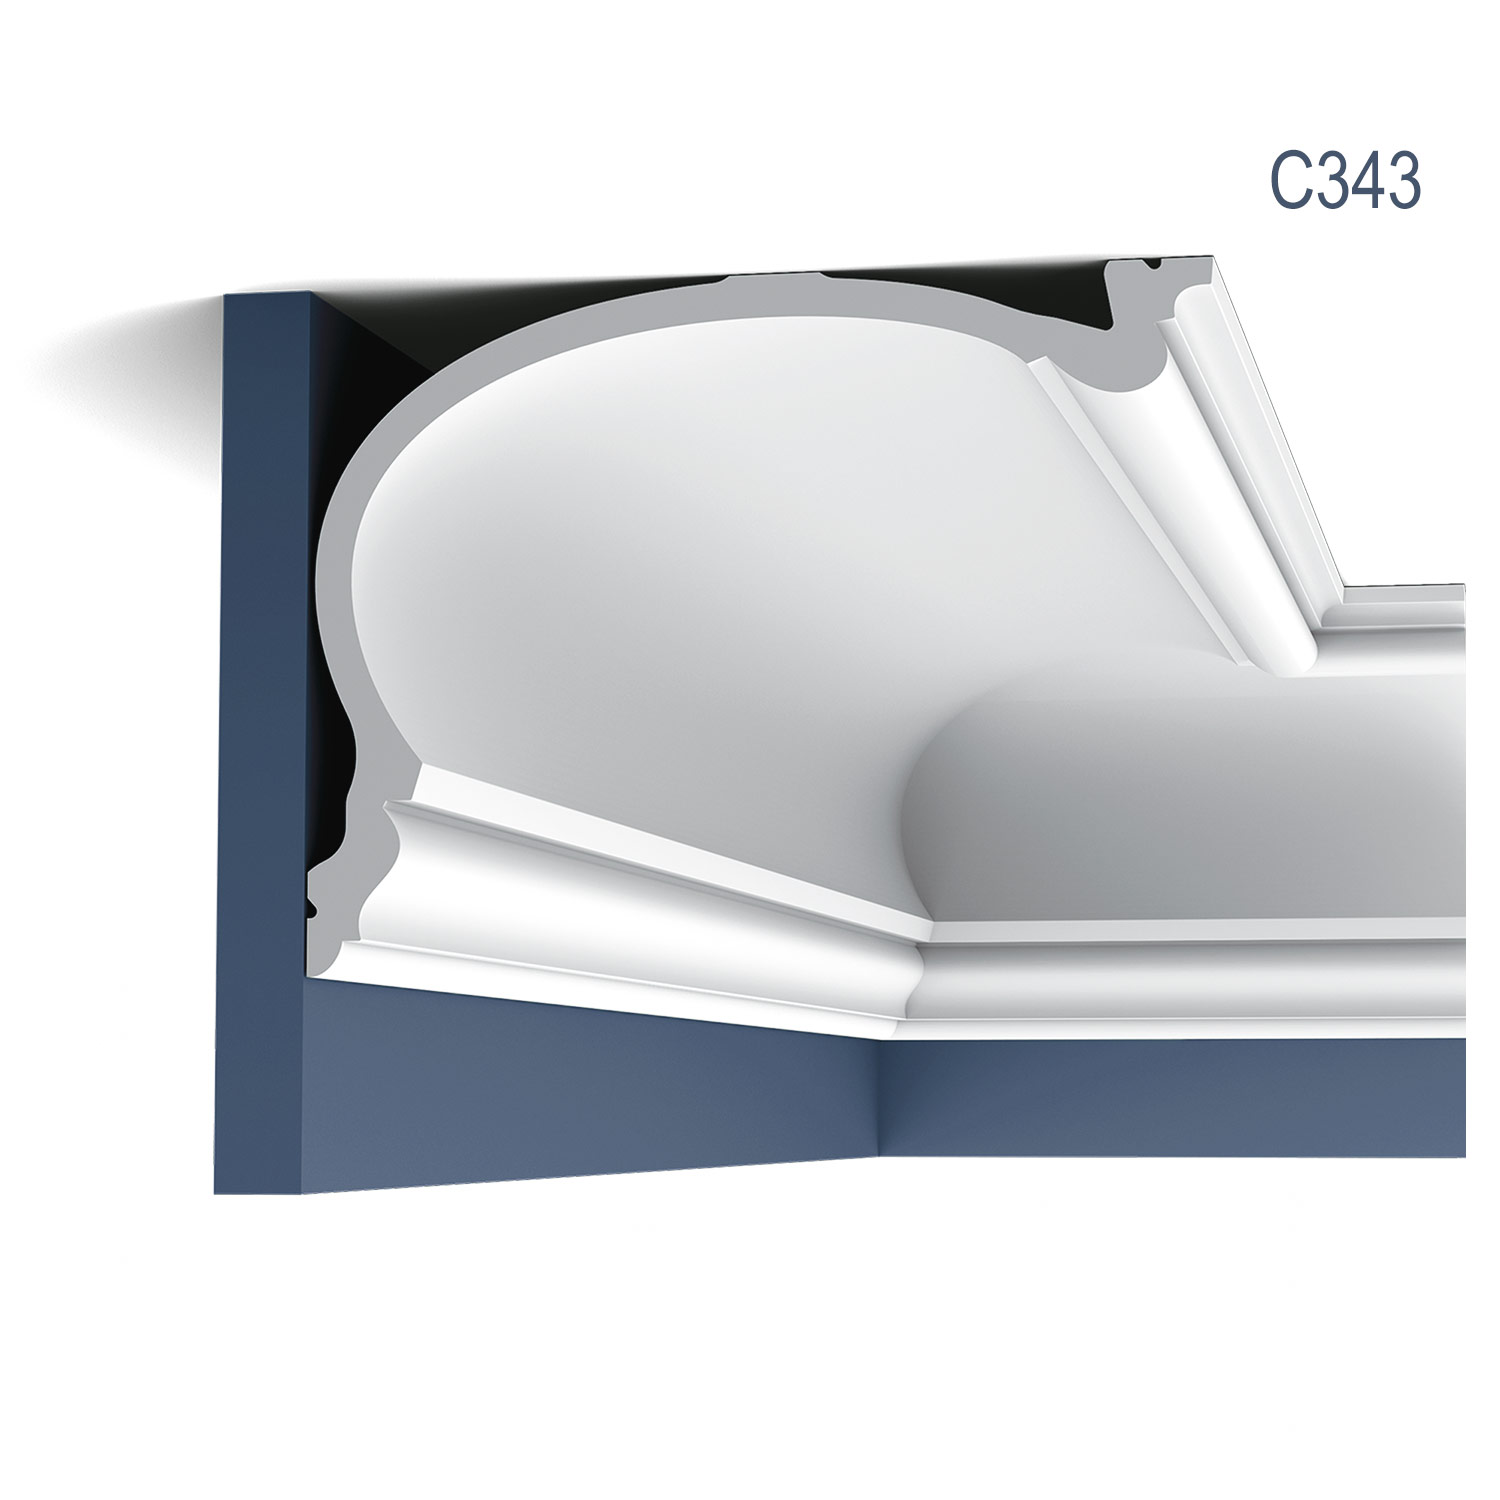 Cornisa Luxxus C343, Dimensiuni: 200 X 25 X 19 cm, Orac Decor Orac Decor